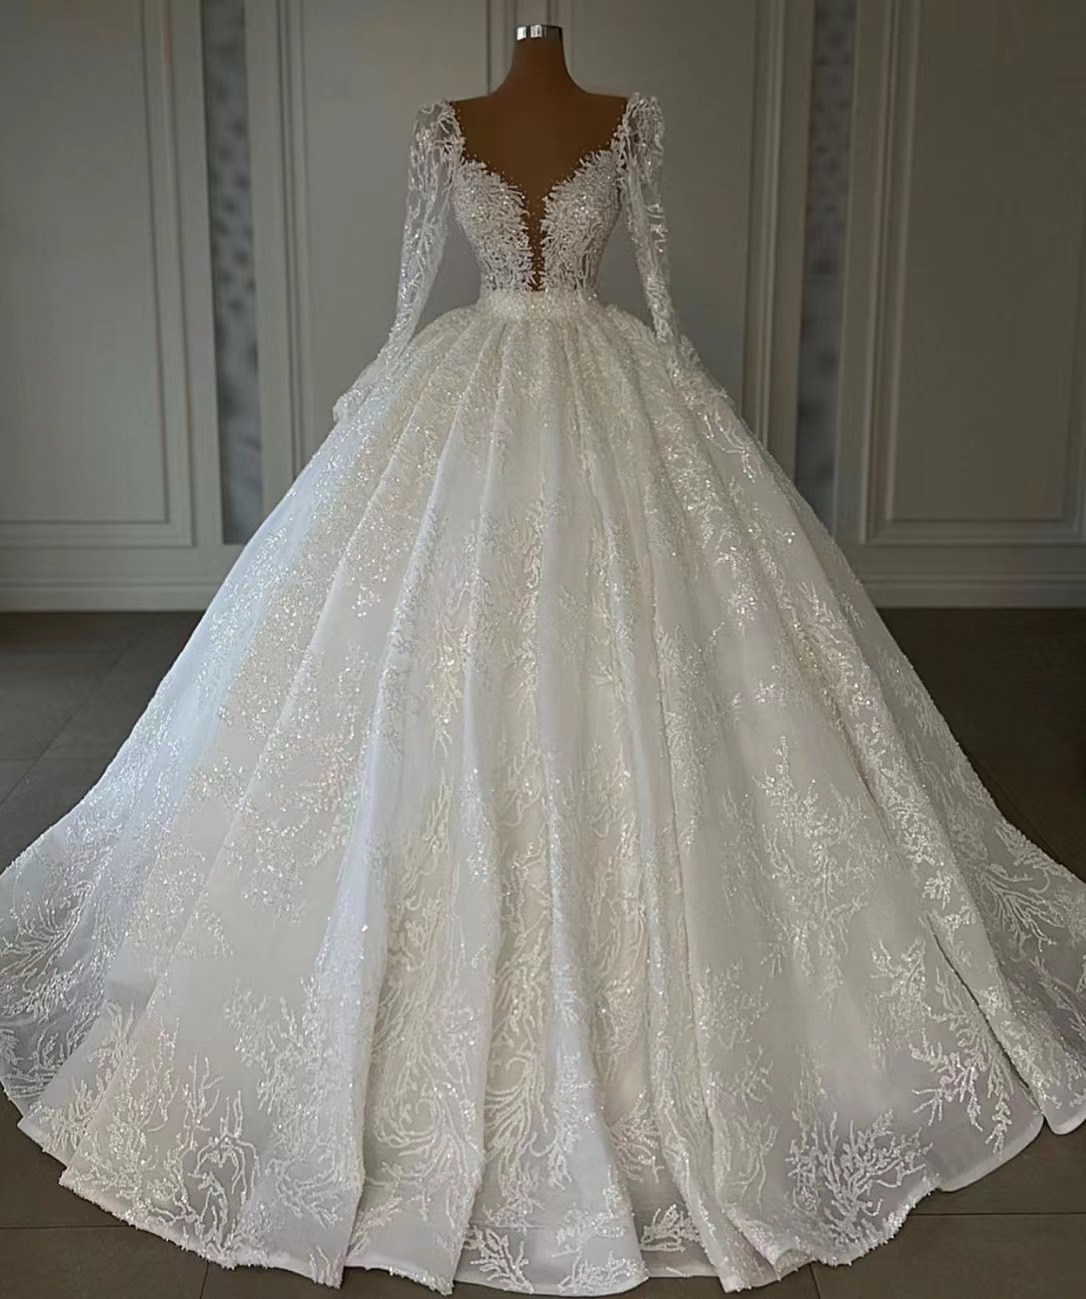 Long Sleeve Wedding Dress, Wedding Dresses For Women, Robe De Mariage, Lace Applique Wedding Dress, Boho Wedding Dress, Wedding Dresses For